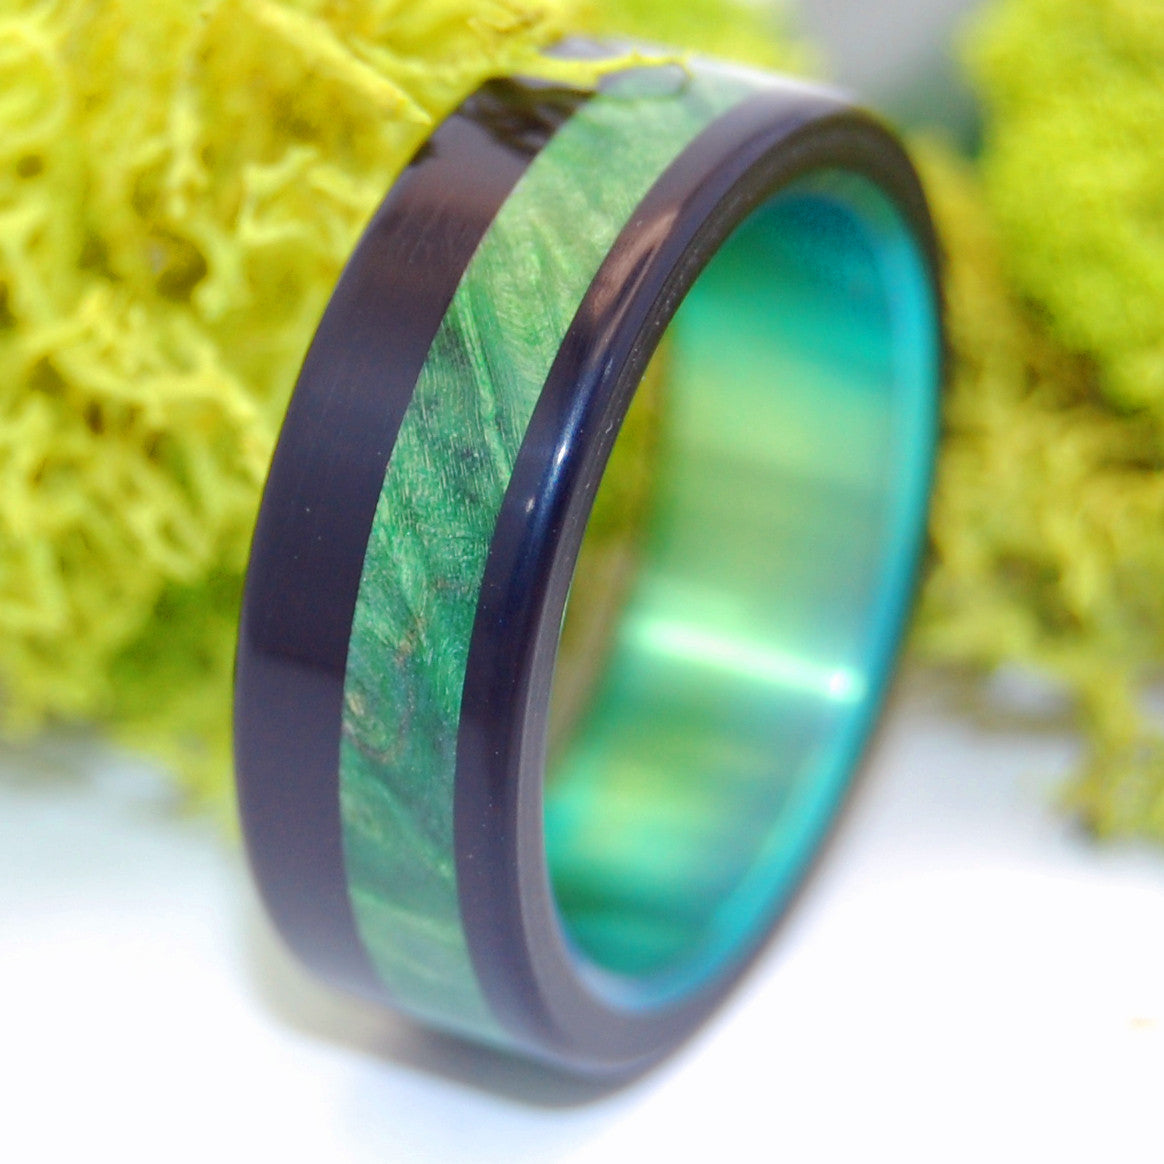 Green Maple Burl Galway | Wooden Wedding Ring - Minter and Richter Designs